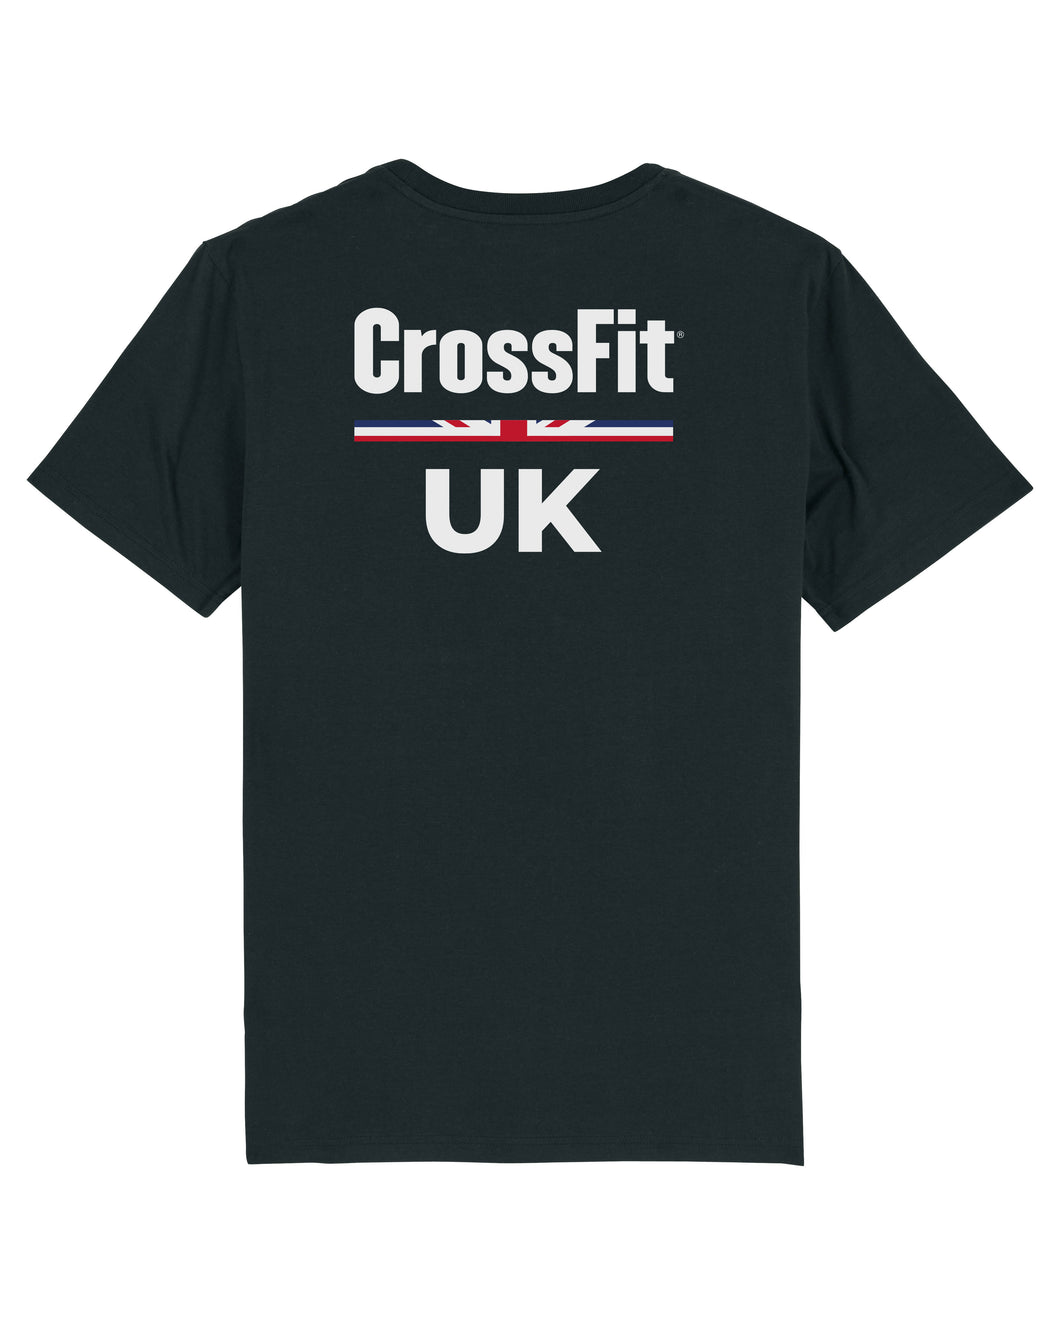 Official CrossFit UK x POTS T shirt